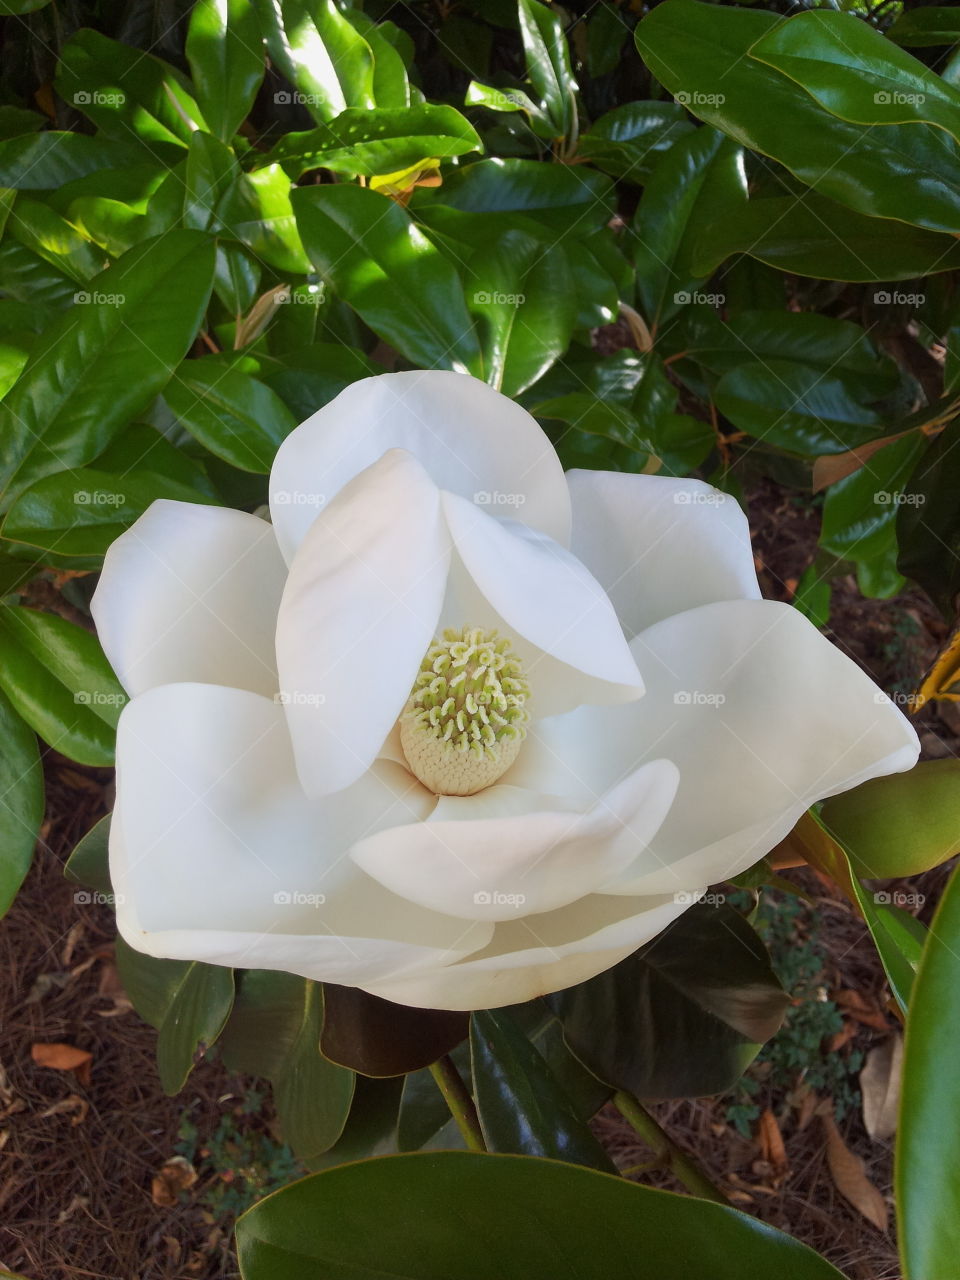 Beautiful magnolia flower